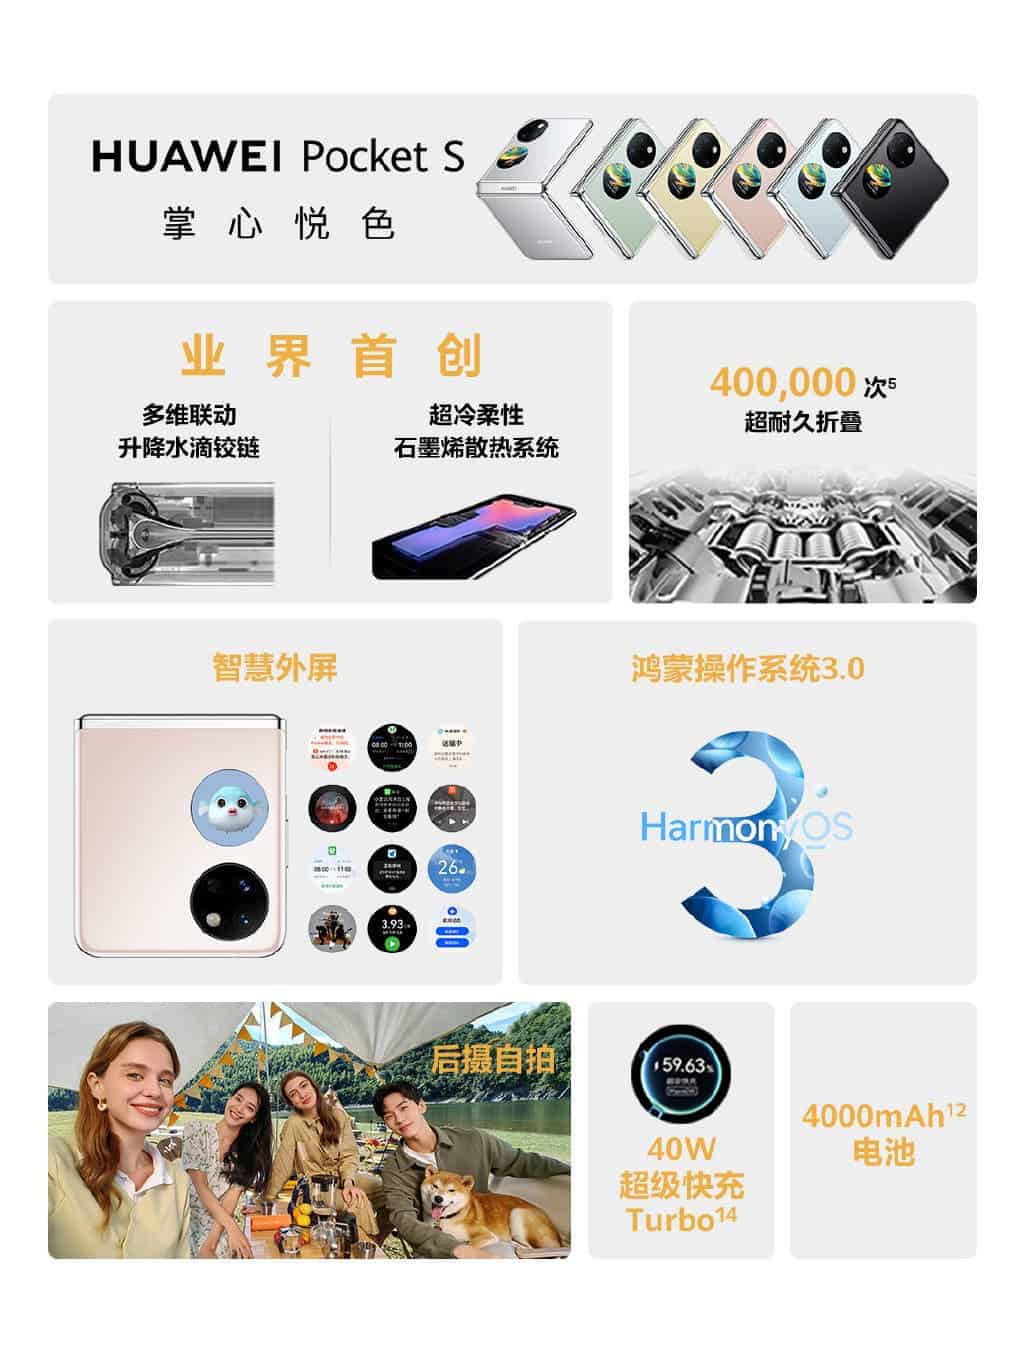 Huawei foldable handset